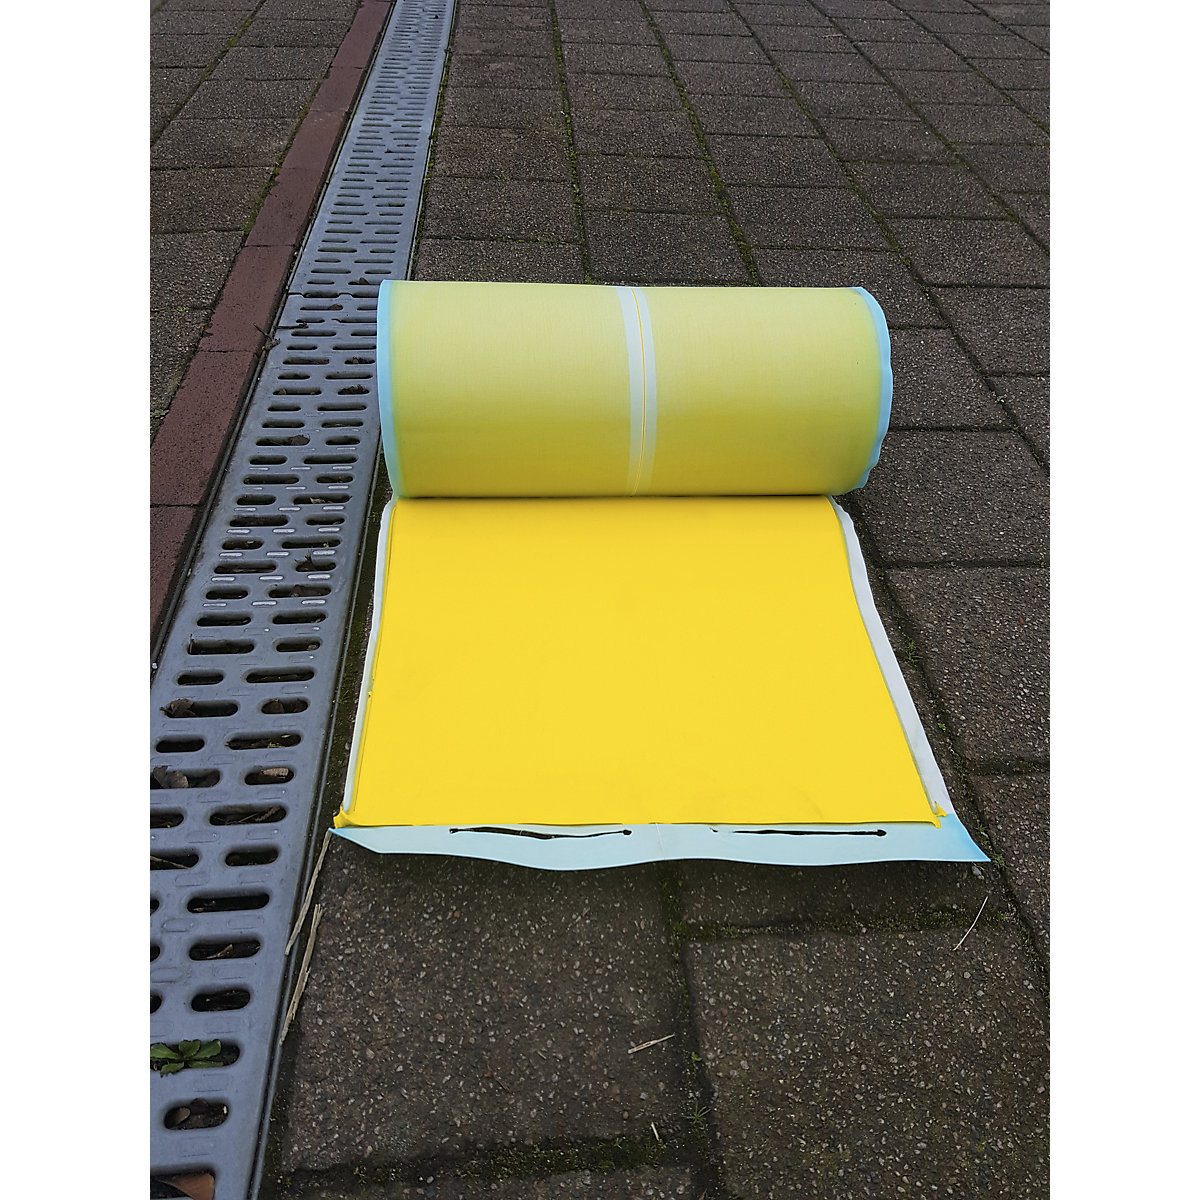 EUROKRAFTbasic – Flexible drain sealing mat (Product illustration 2)